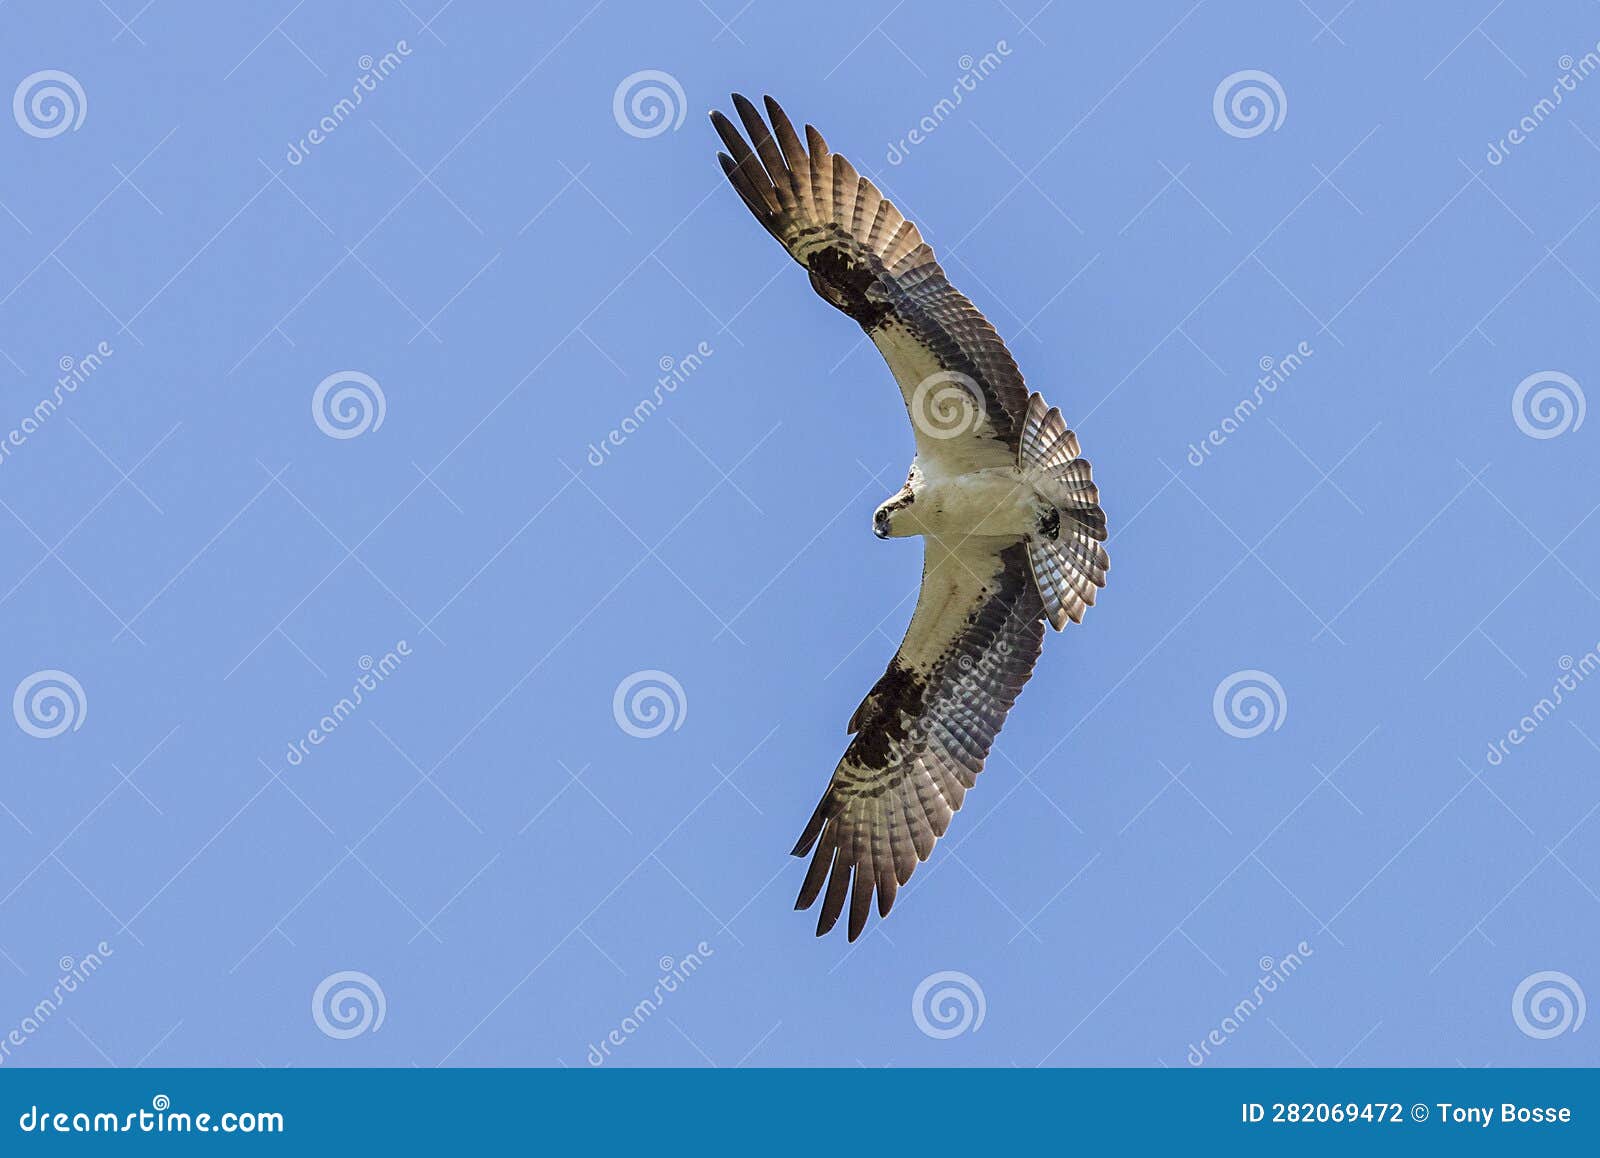 https://thumbs.dreamstime.com/z/osprey-seahawk-wingspan-high-above-observing-prey-below-osprey-wingspan-high-above-observing-prey-below-282069472.jpg